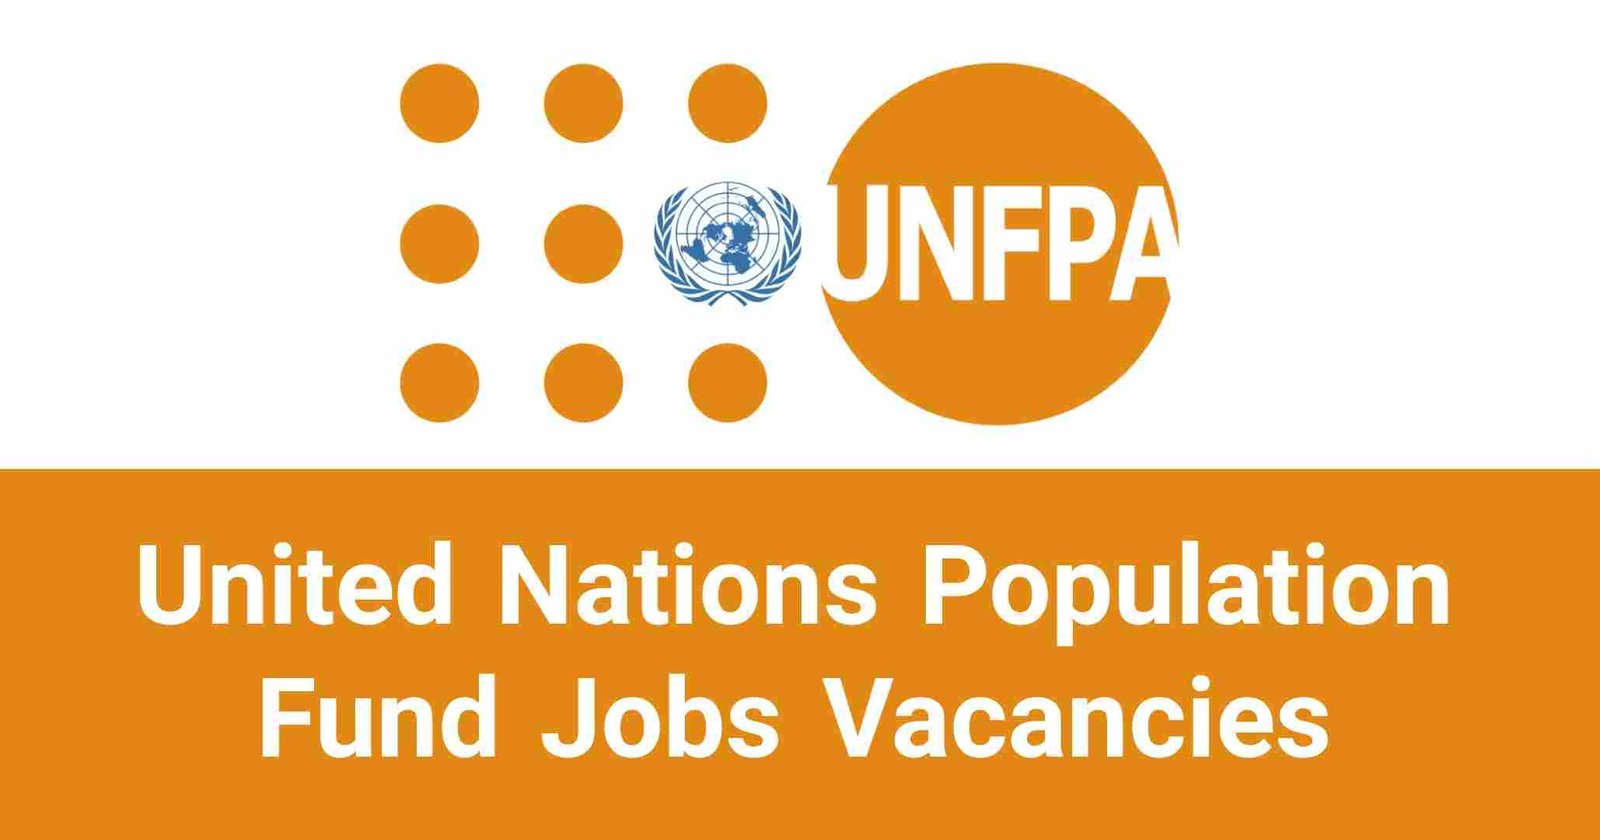 United Nations Population Fund Jobs Vacancies